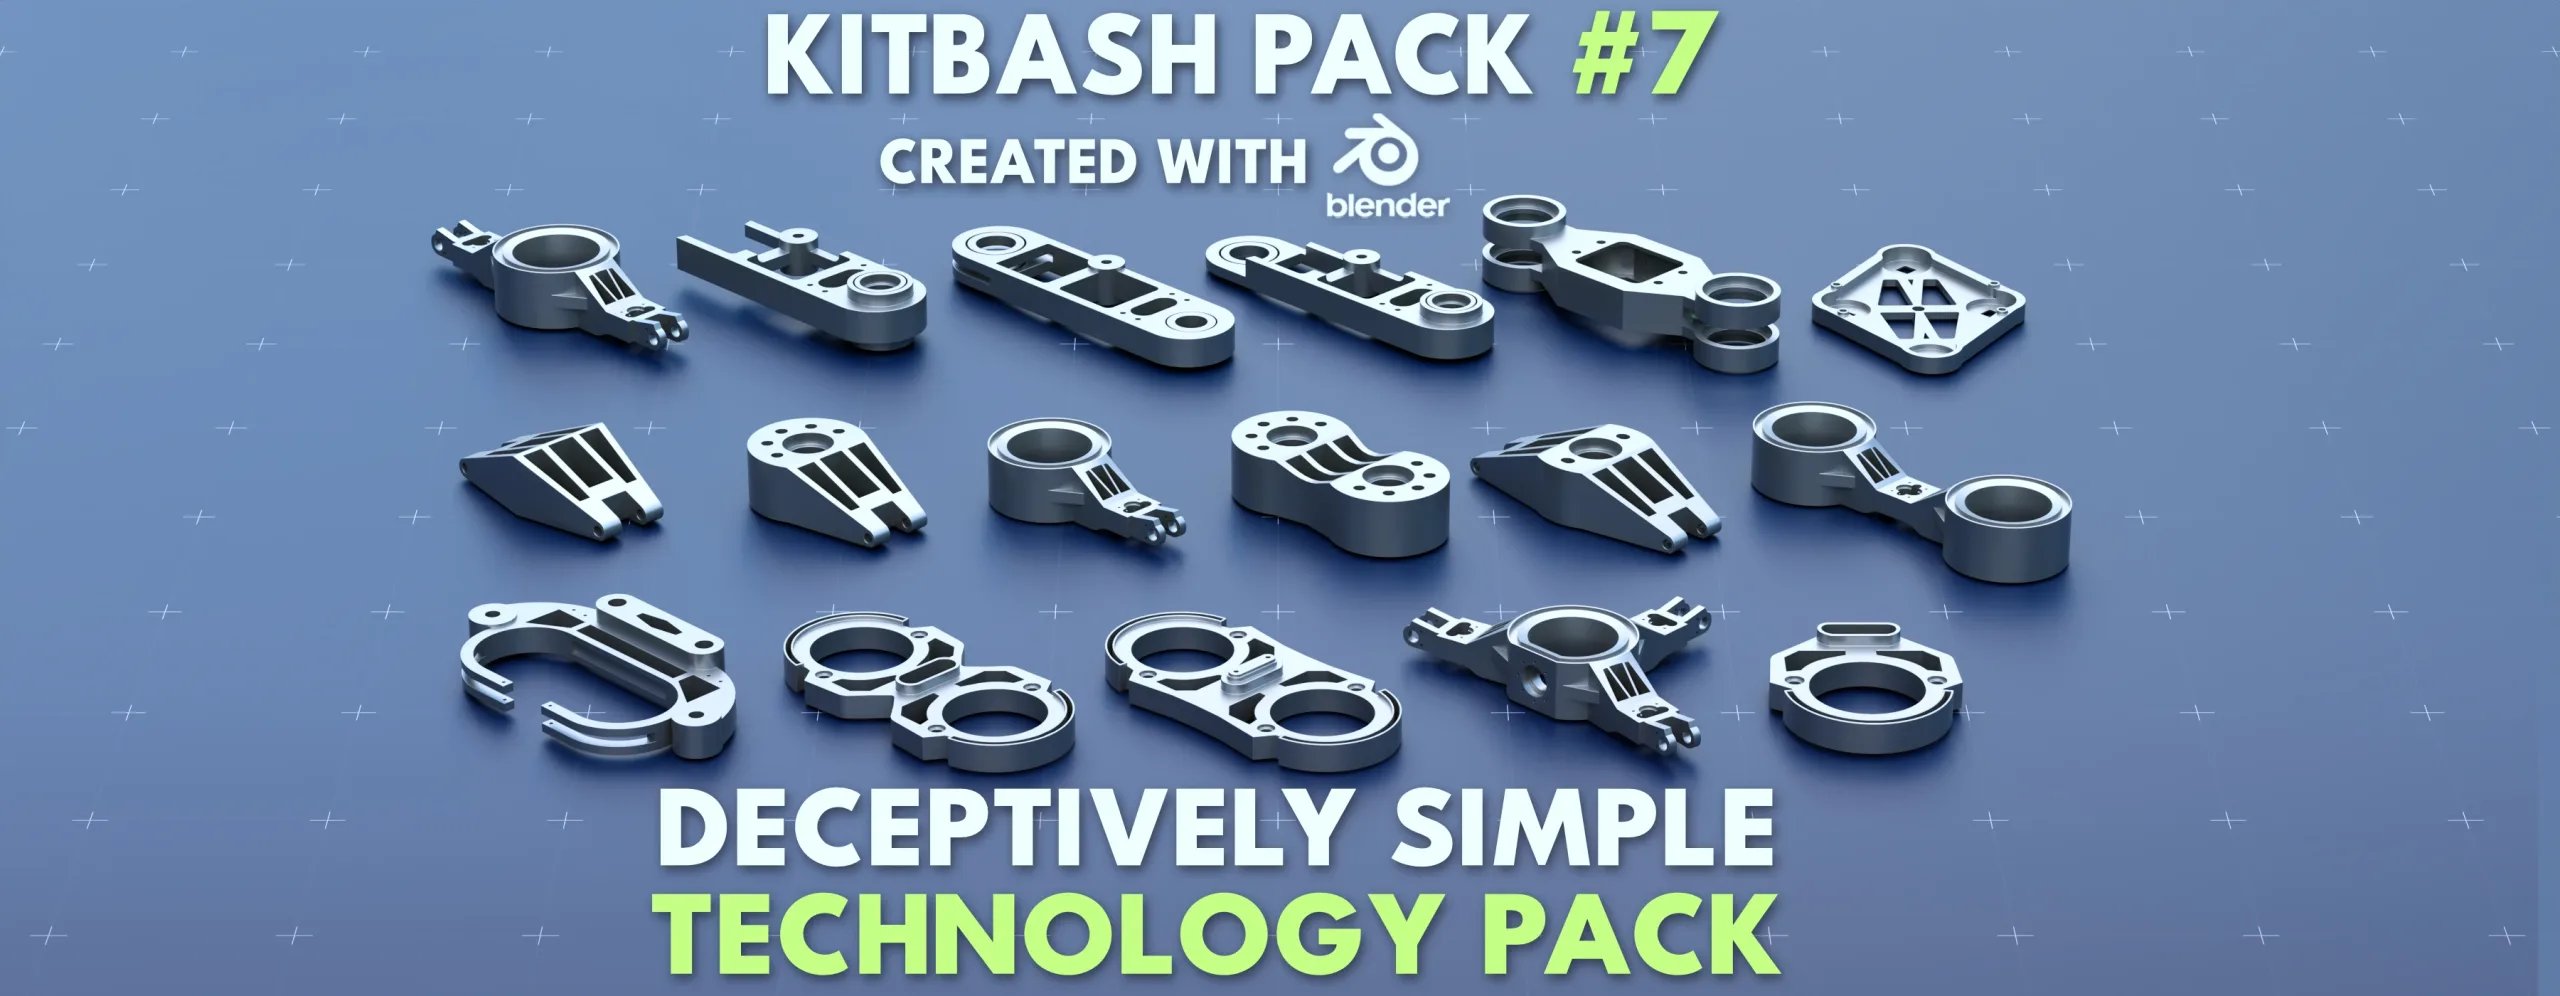 Simple Technology Kitbash #7